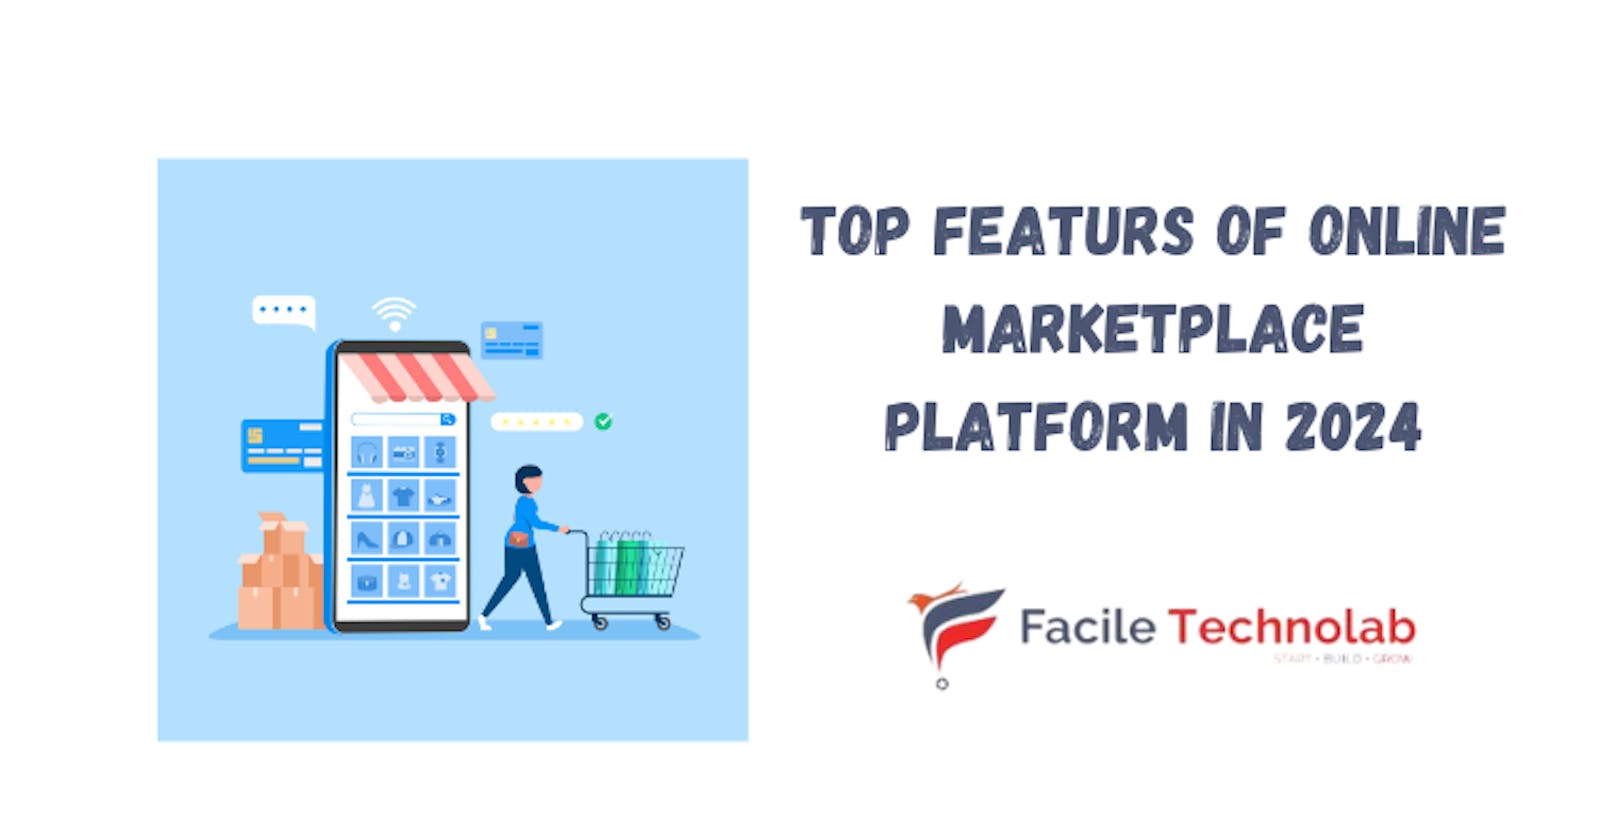 Top features of online marketplace platform in 2024